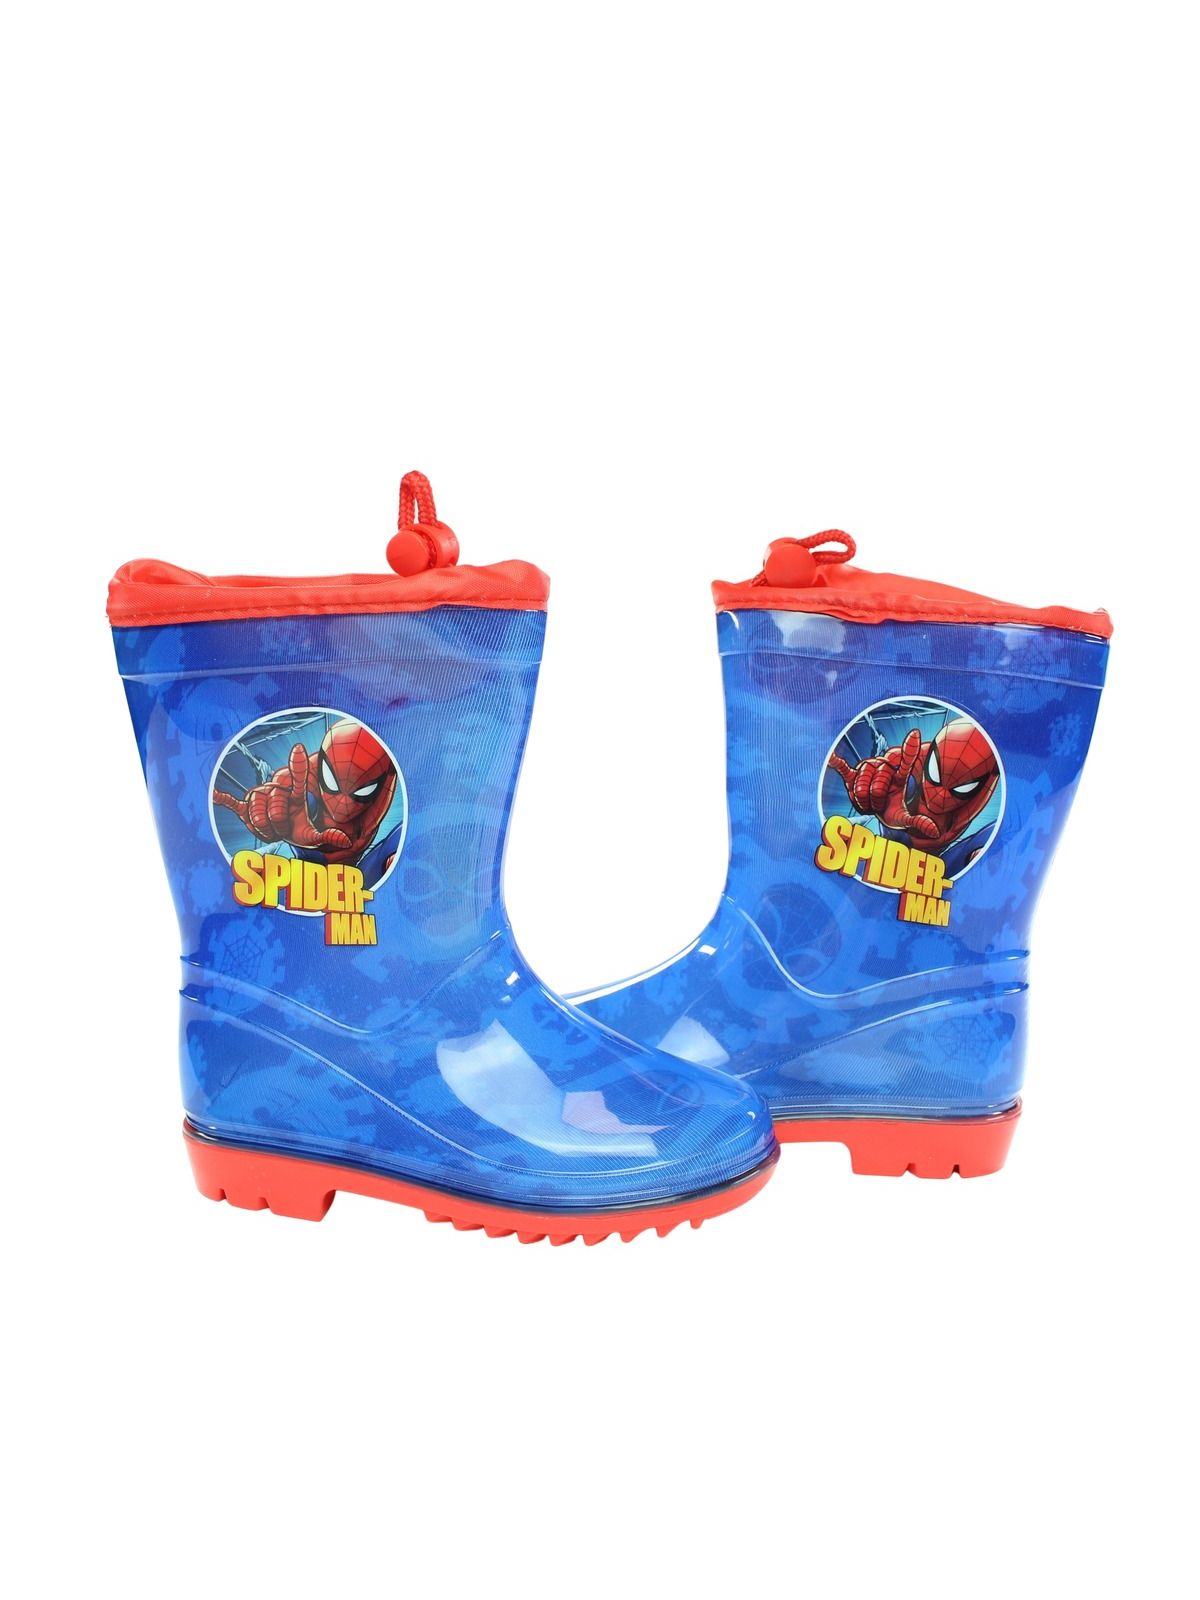 Spiderman Rain boot